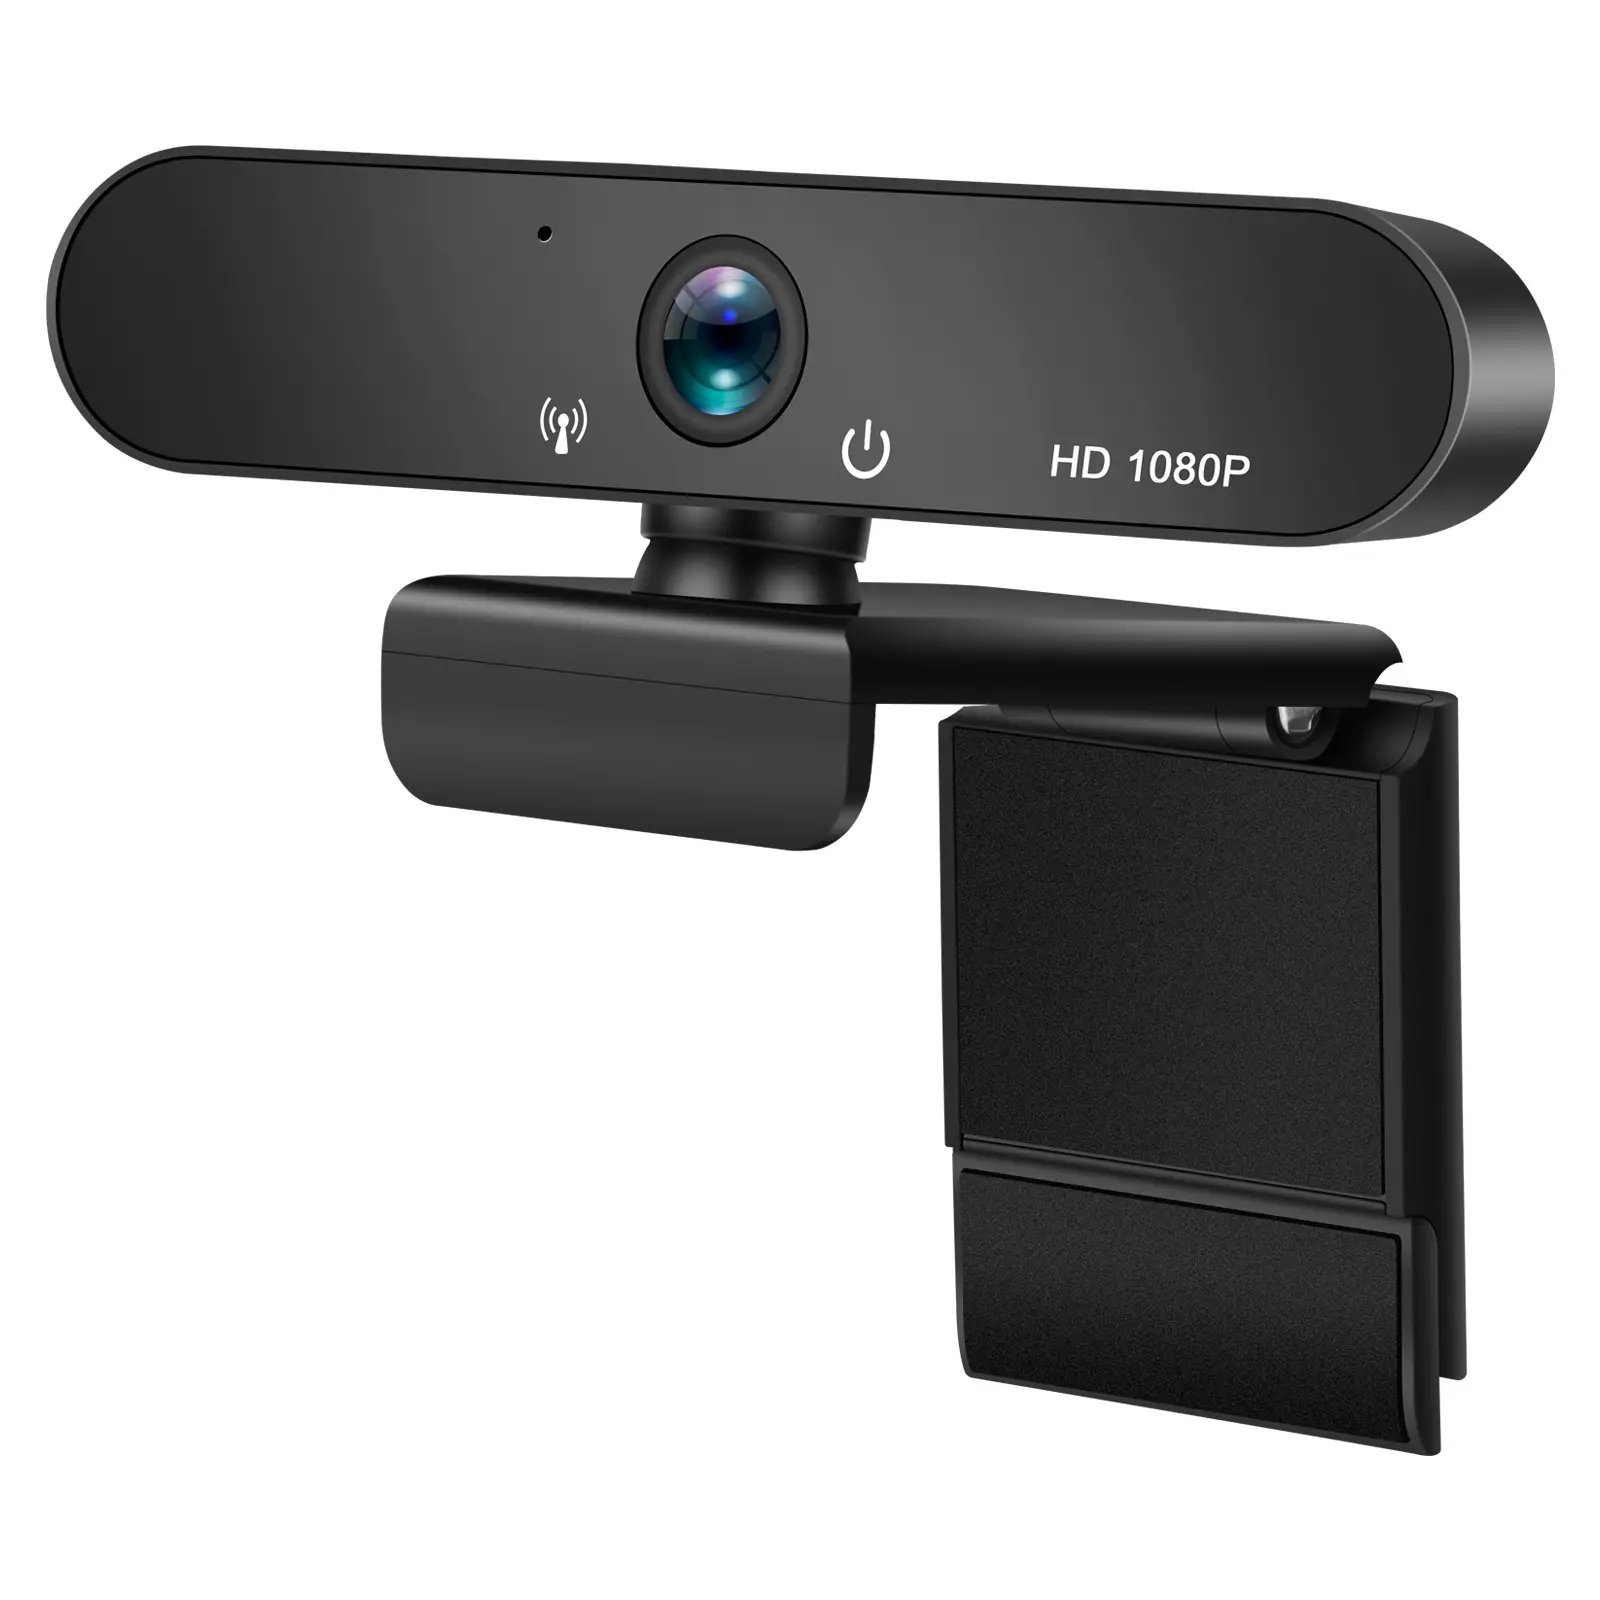 HD 1080P Webcam PC Mini USB 2.0 Web kamera mikrofon ile canlı akışı için USB bilgisayar kamera USB Video kamera